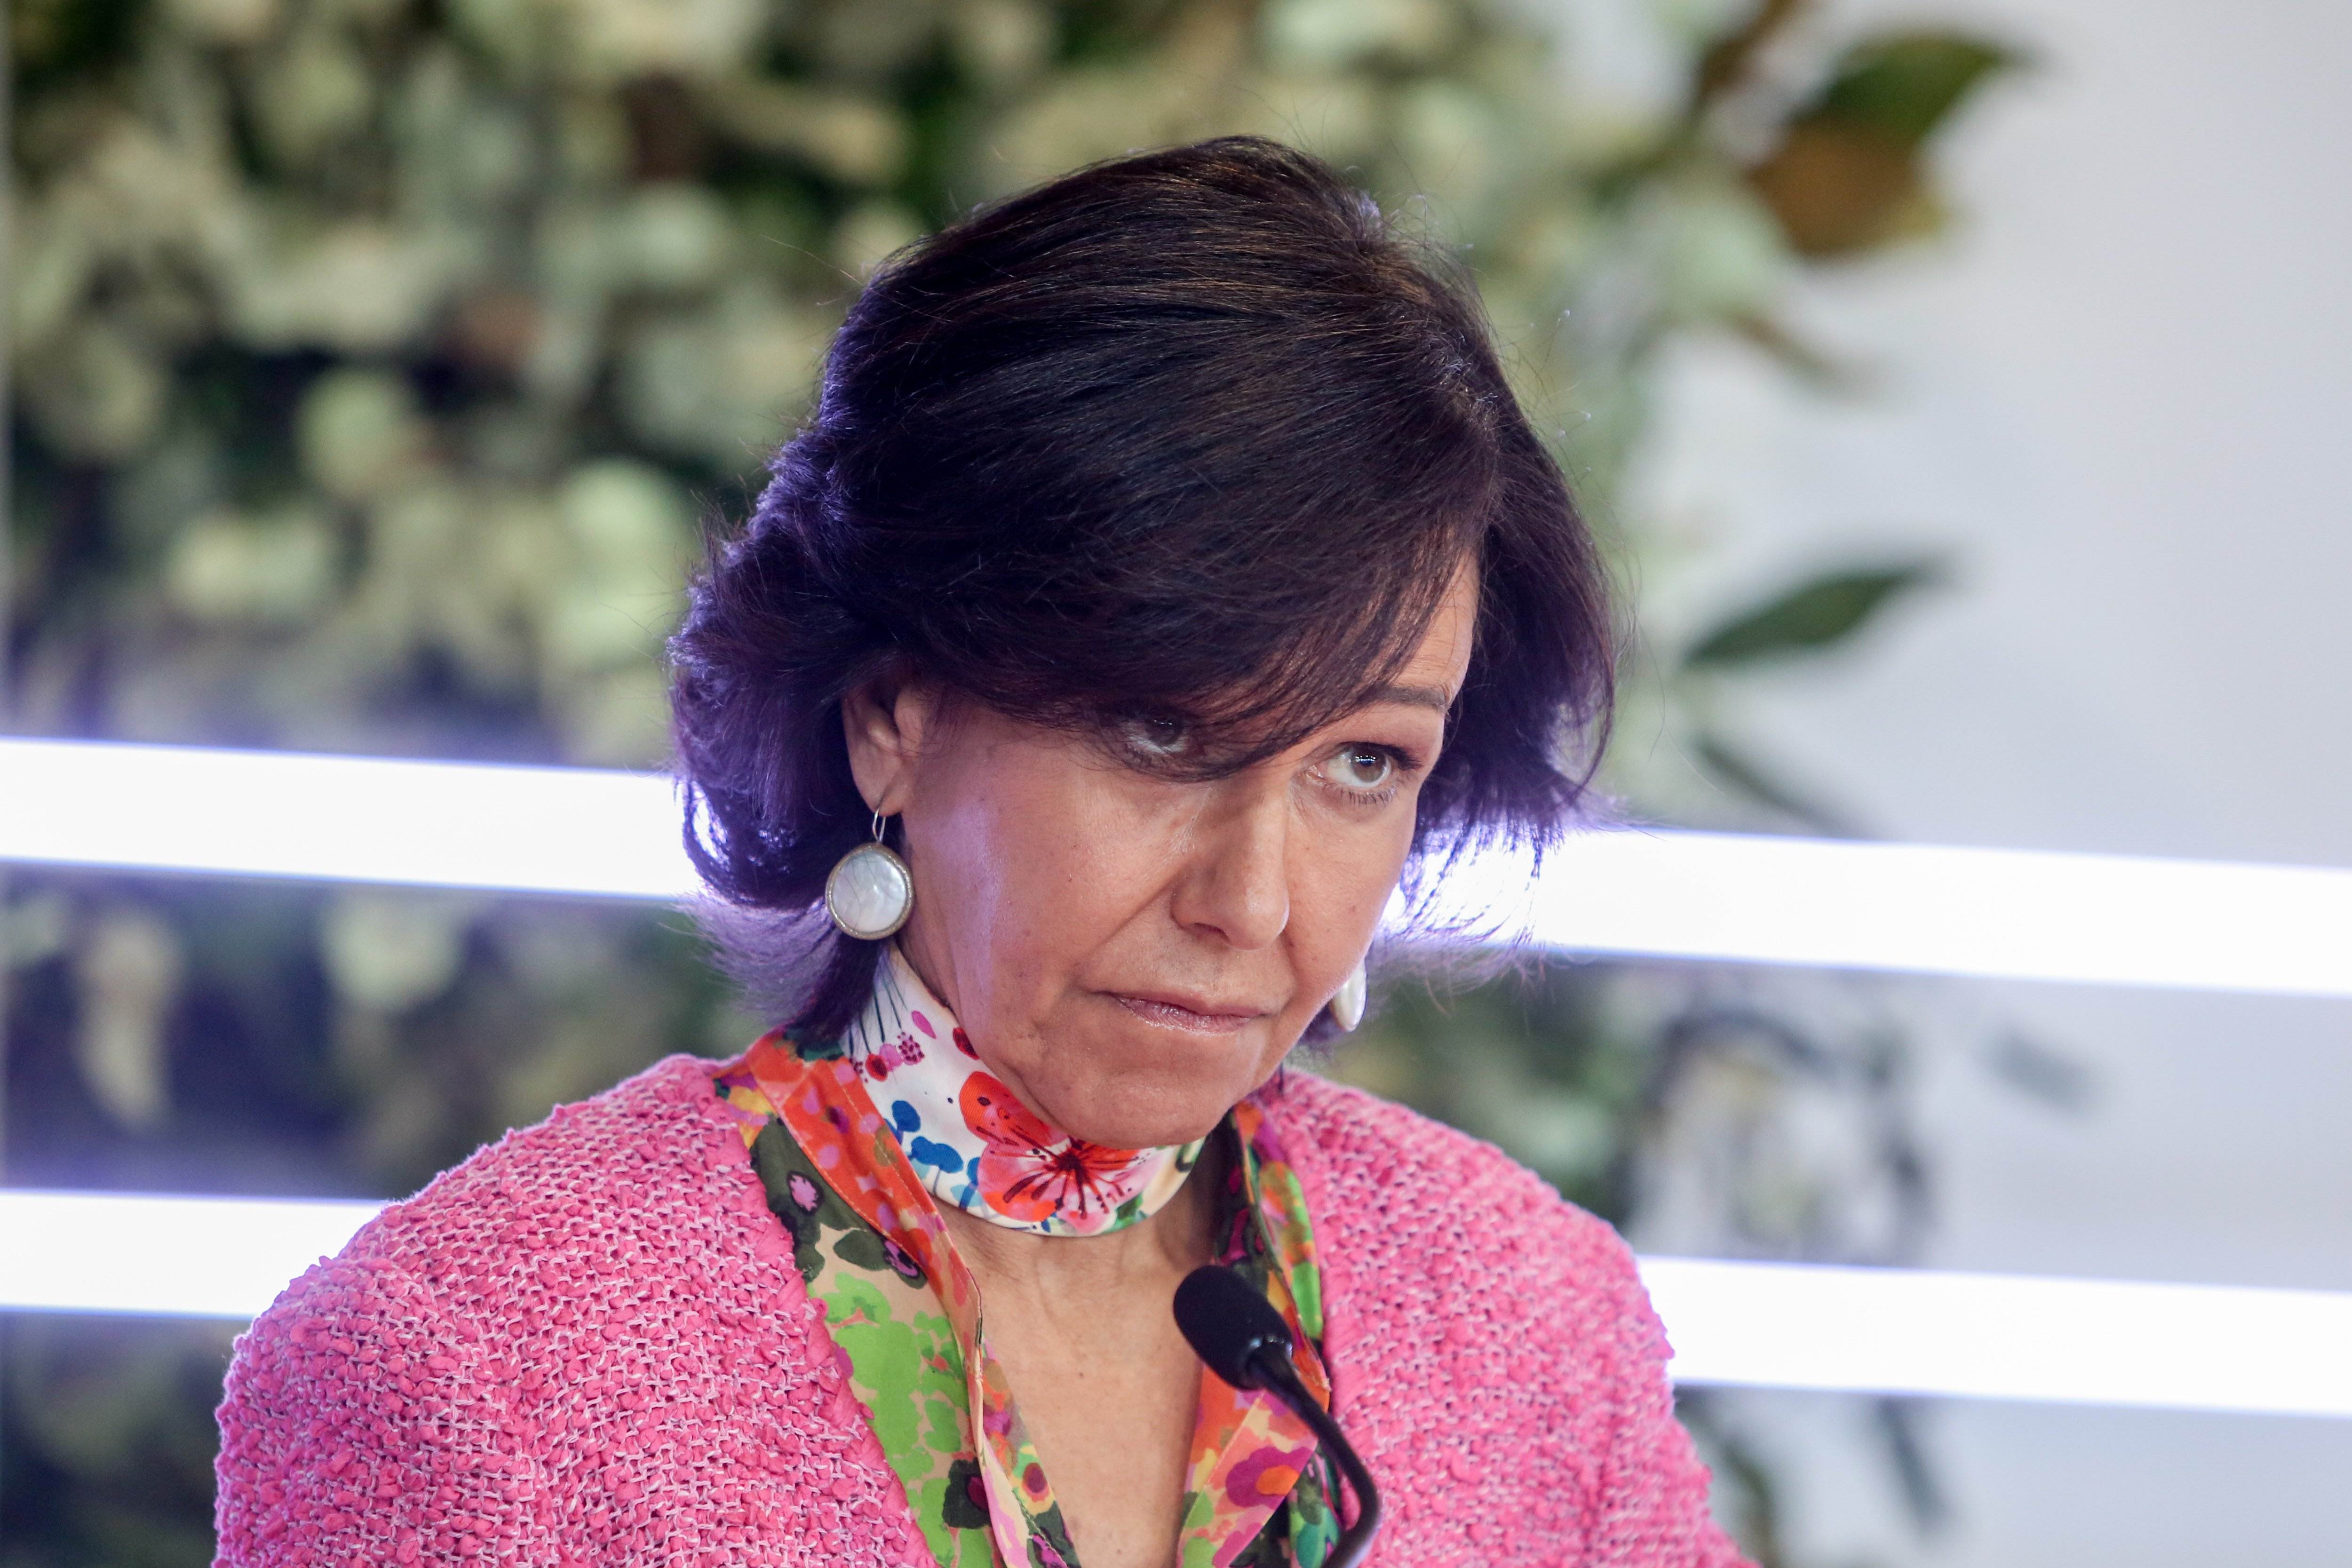 La presidenta del Santander, Ana Botín